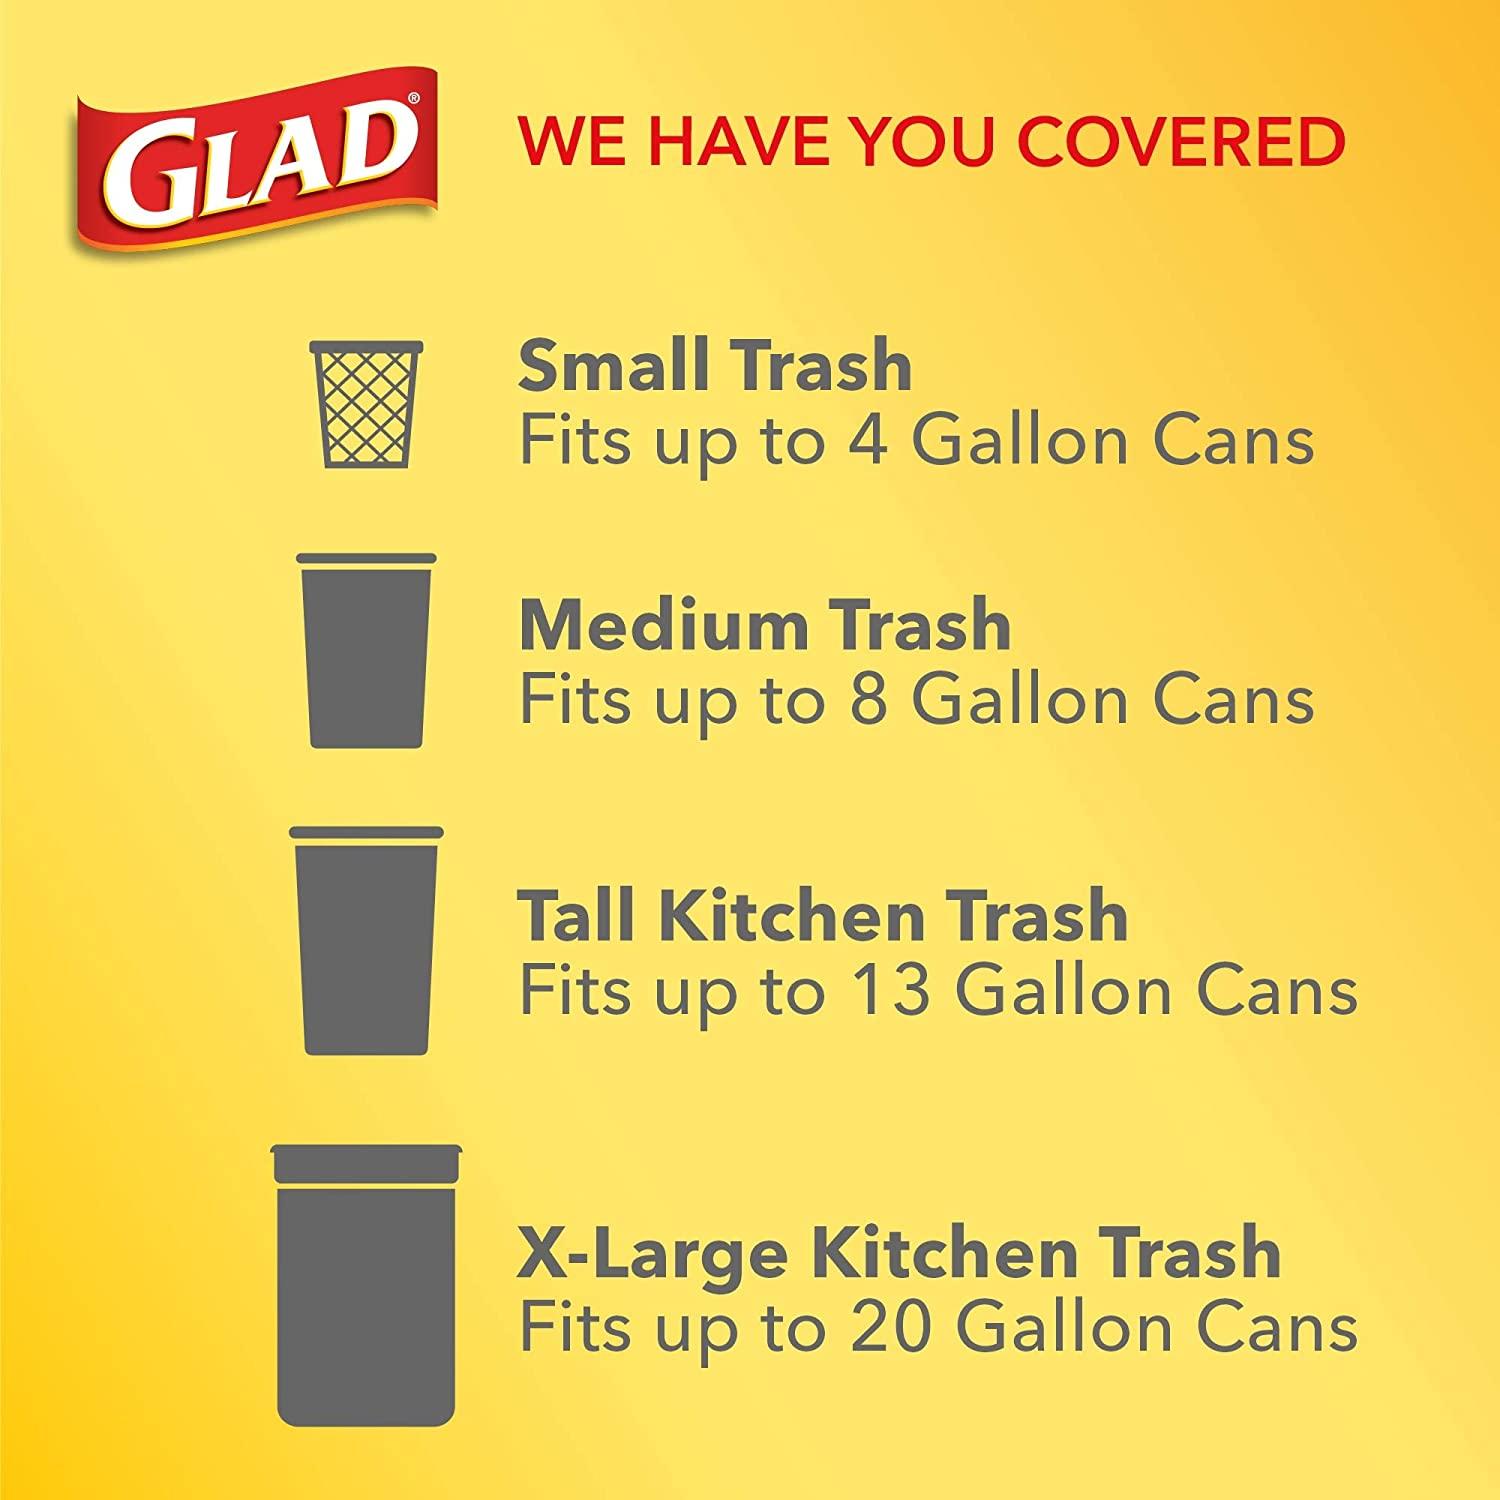 Glad Trash & Food Storage Medium Kitchen Drawstring Trash Bags 8 Gallon  White Trash Bag, Fresh Clean Scent, 80 Count (Package May Vary)